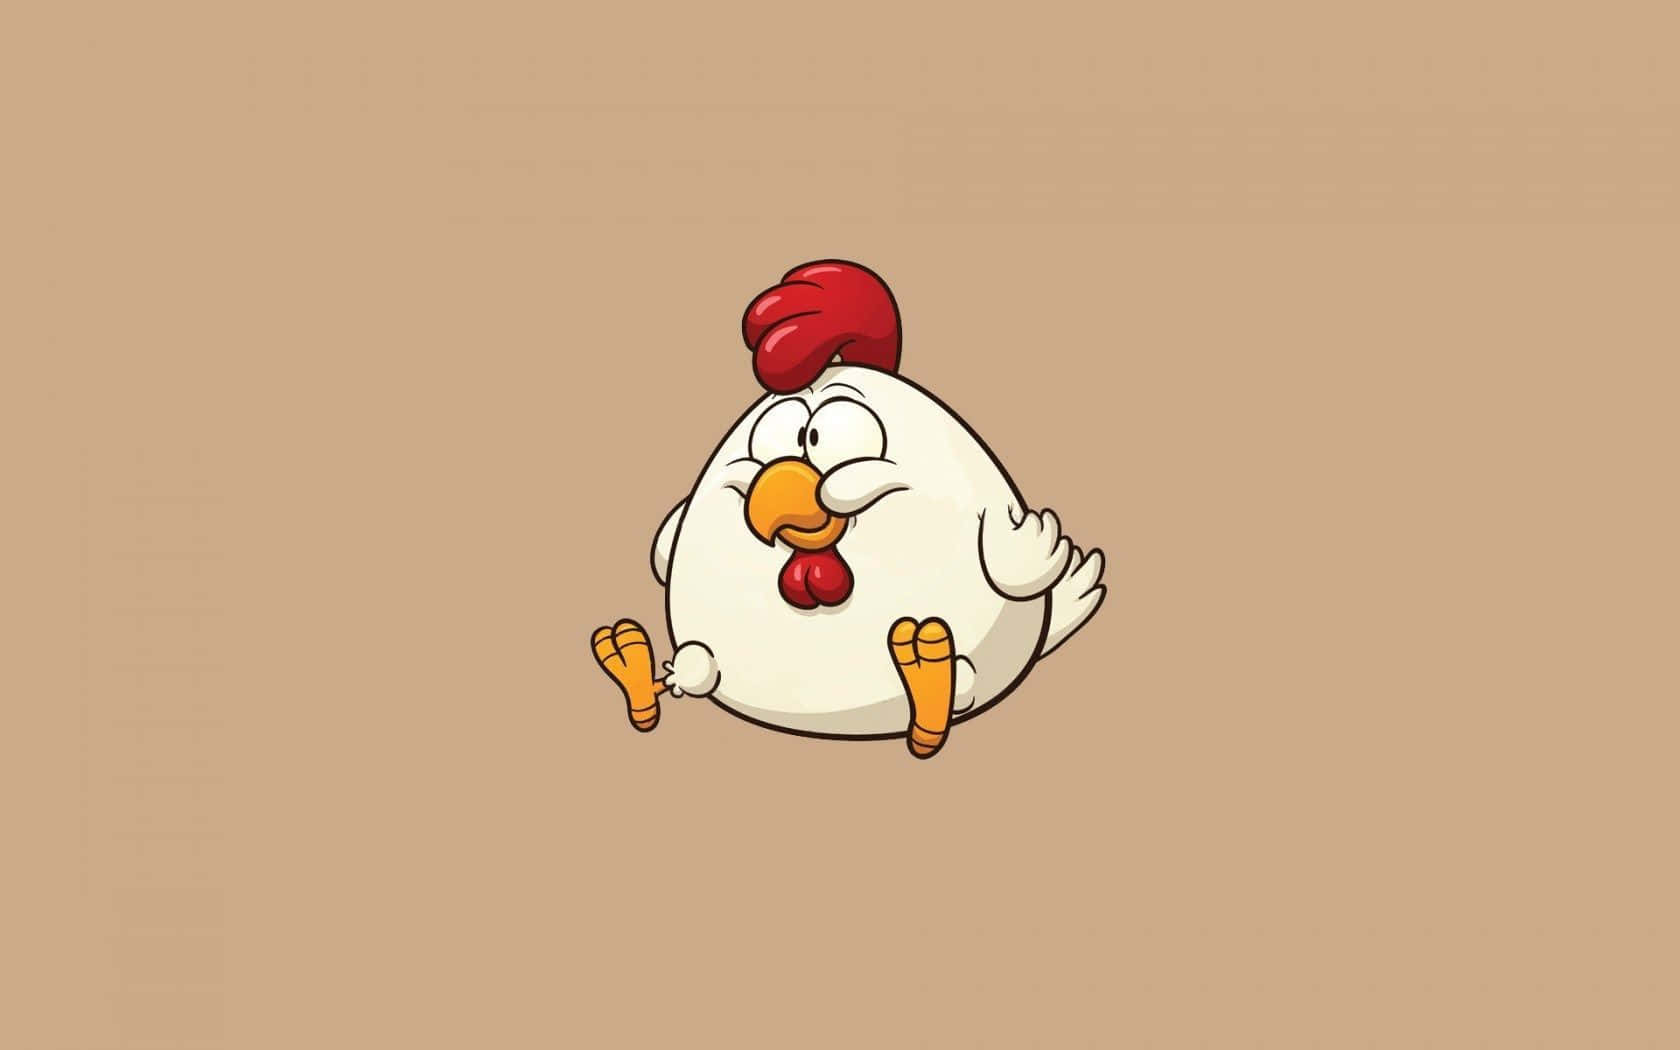 A Cartoon Chicken Is Standing On A Beige Background